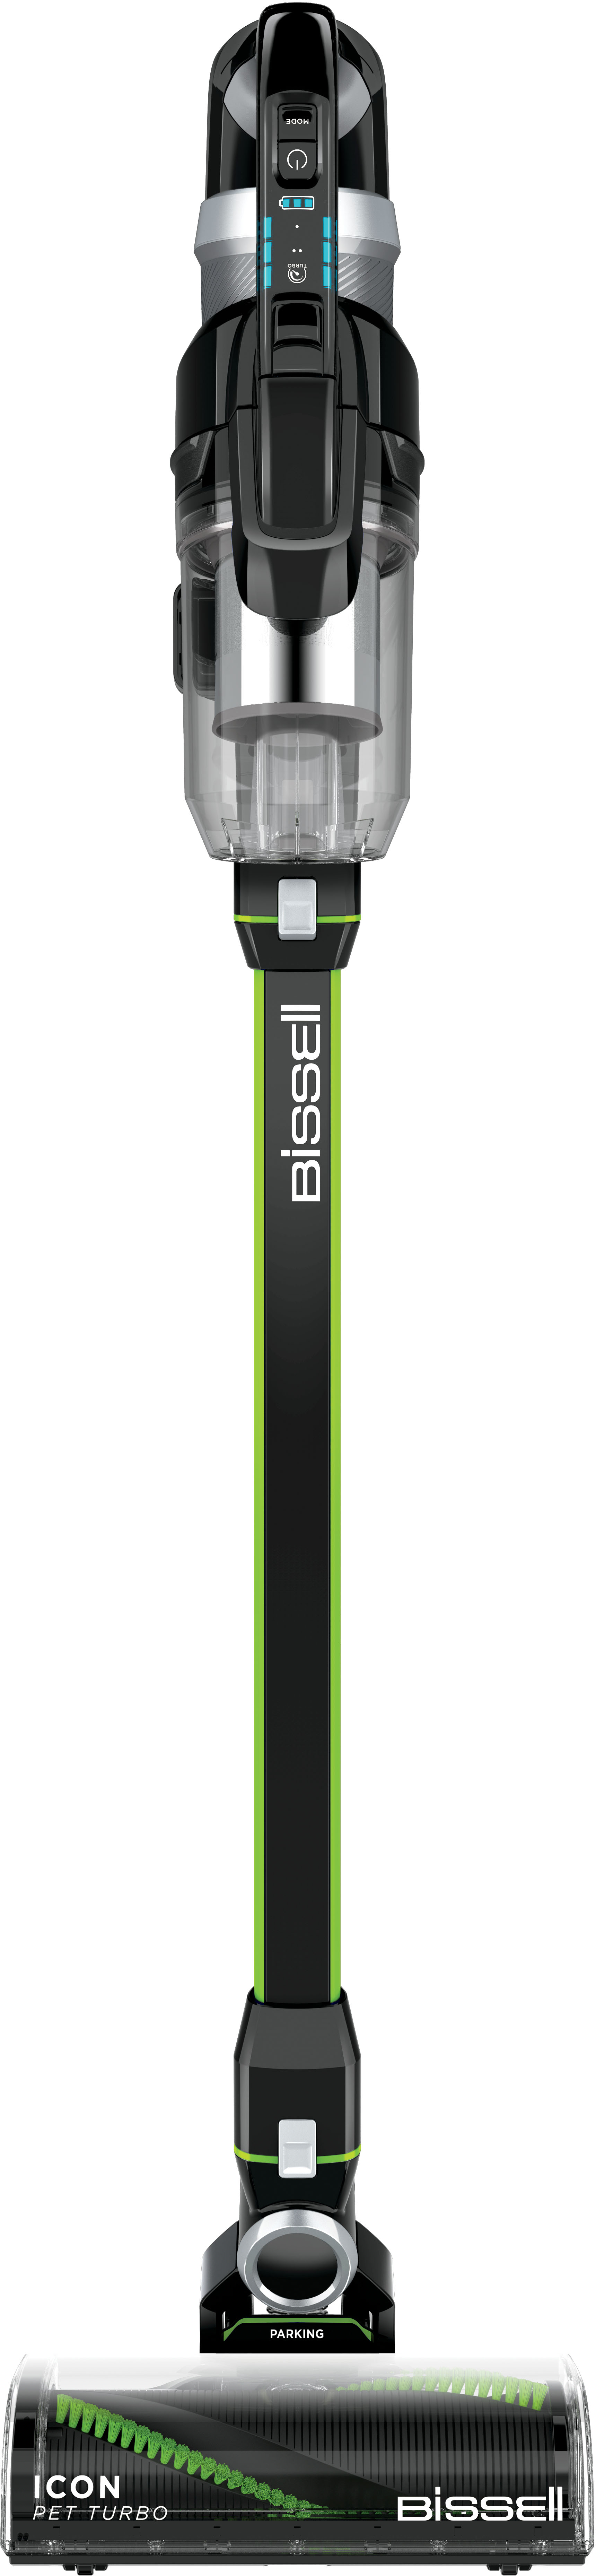 Bissell ICONpet Turbo Edge Cordless Stick Vacuum